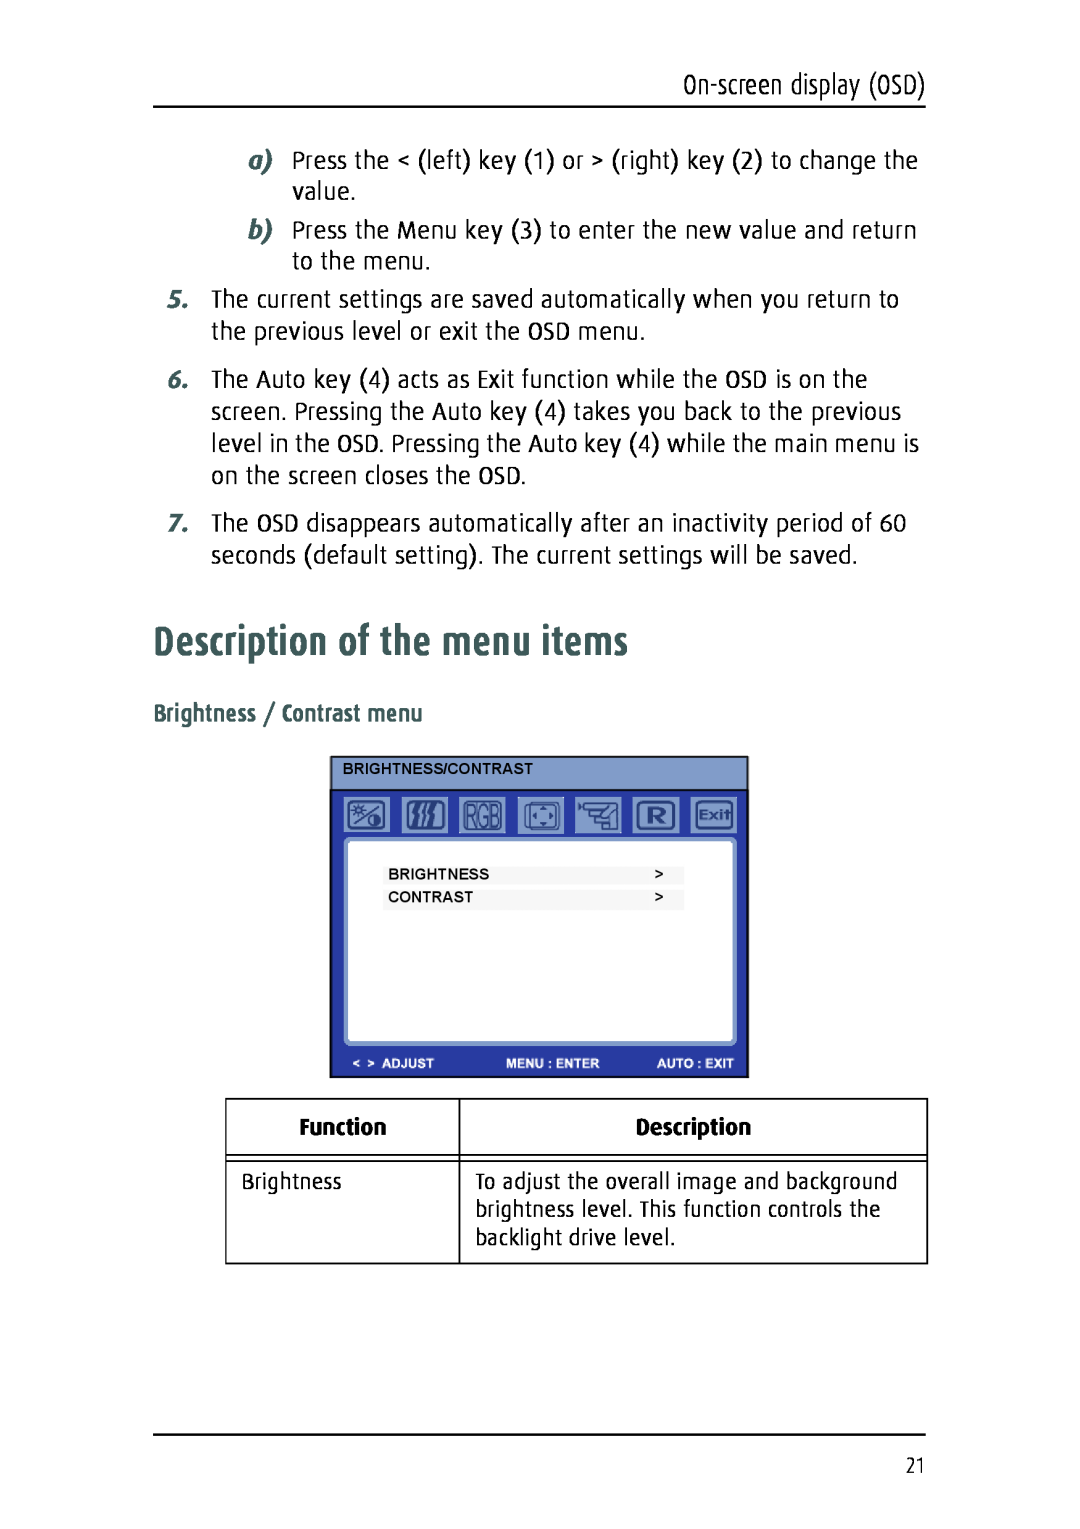 Barco 1219 user manual Description of the menu items, Brightness / Contrast menu, On-screen display OSD 